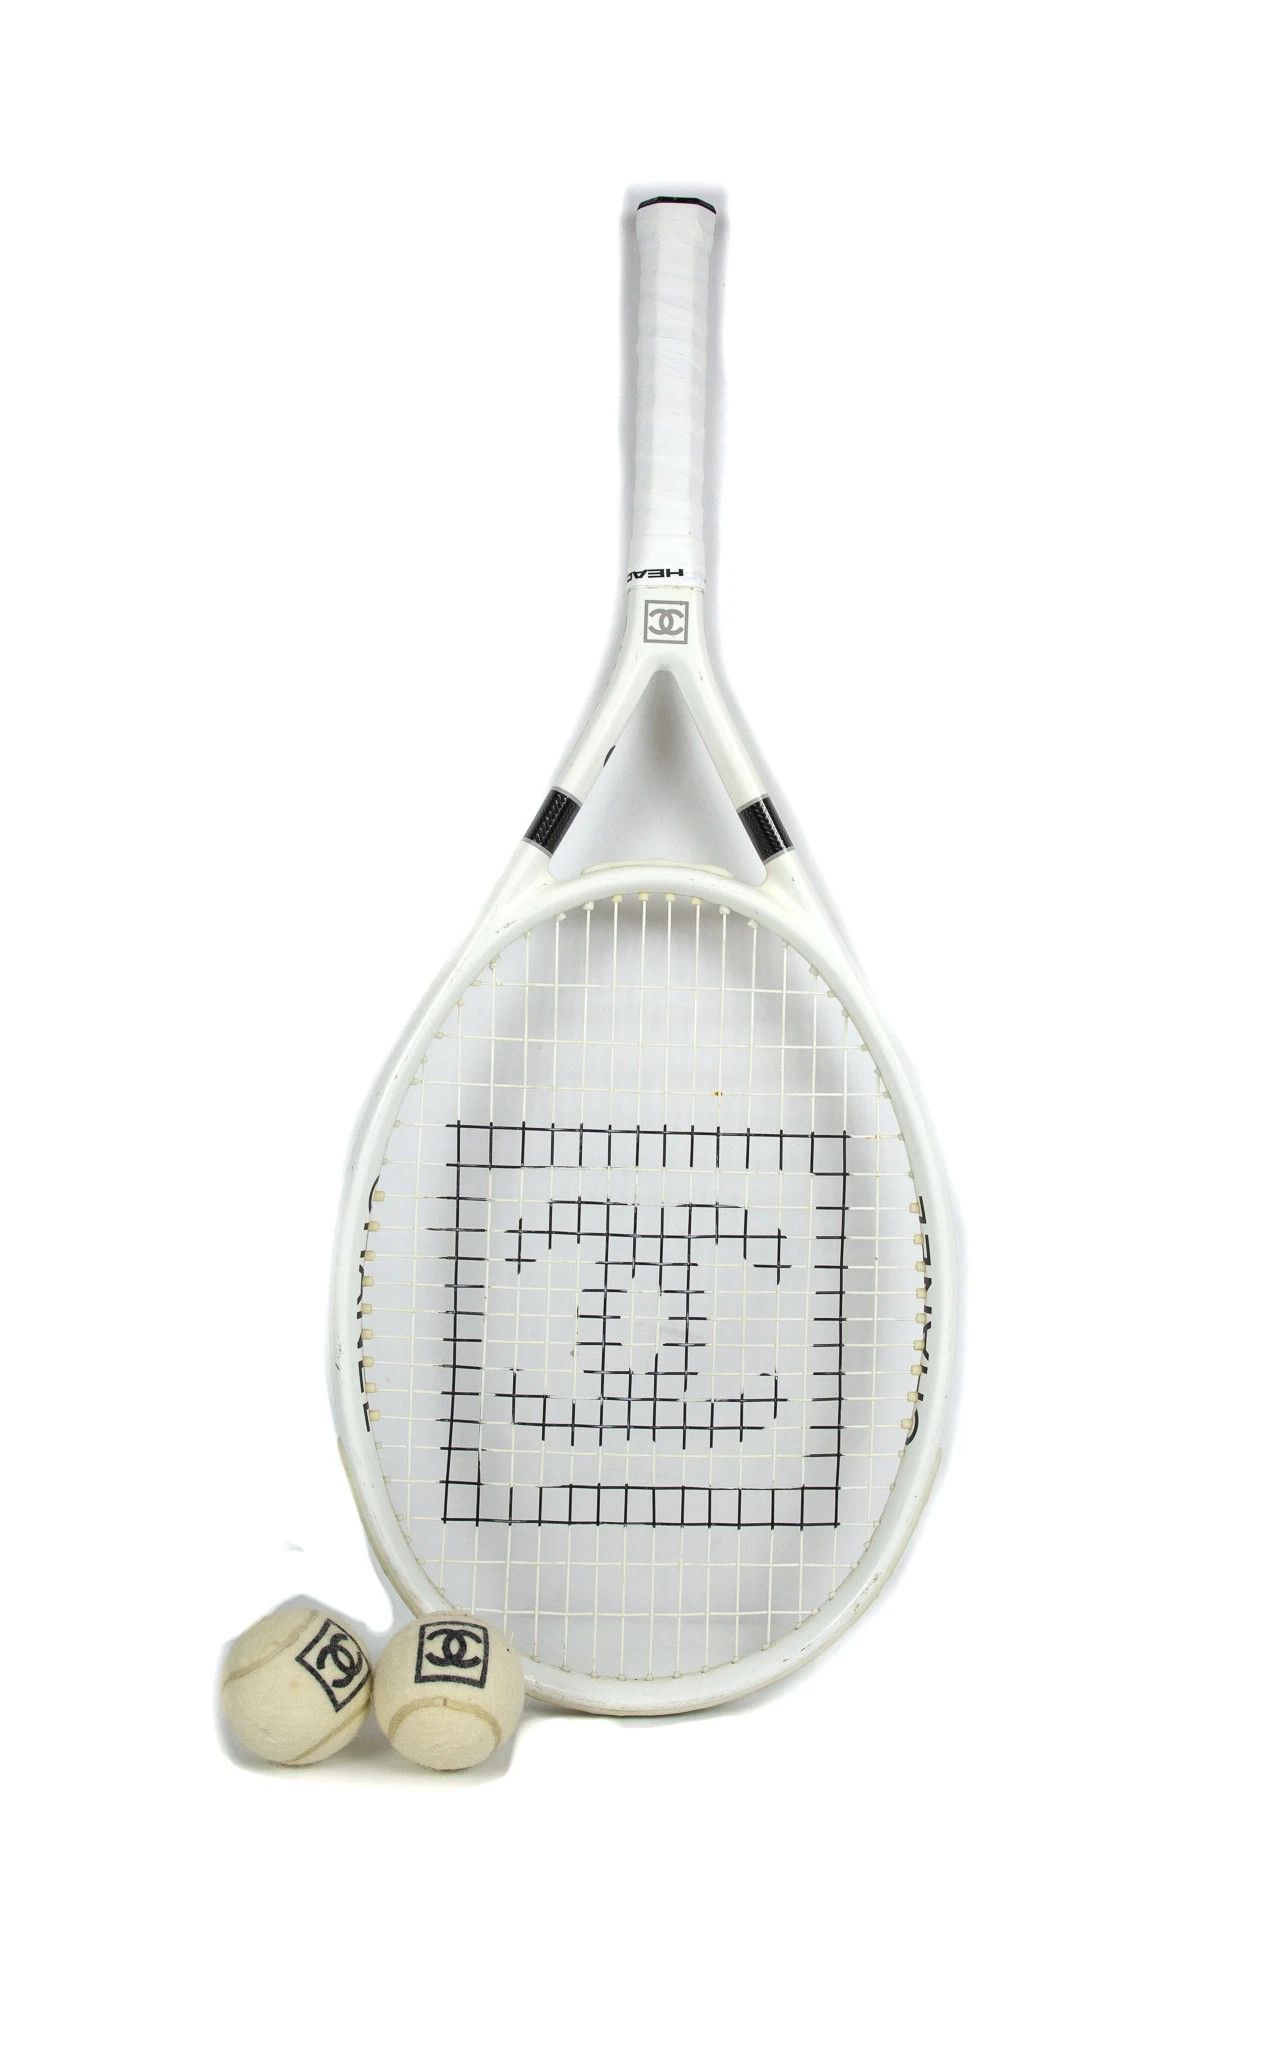 2pc Chanel Designer Tennis Racquet & Ball Set. Includes